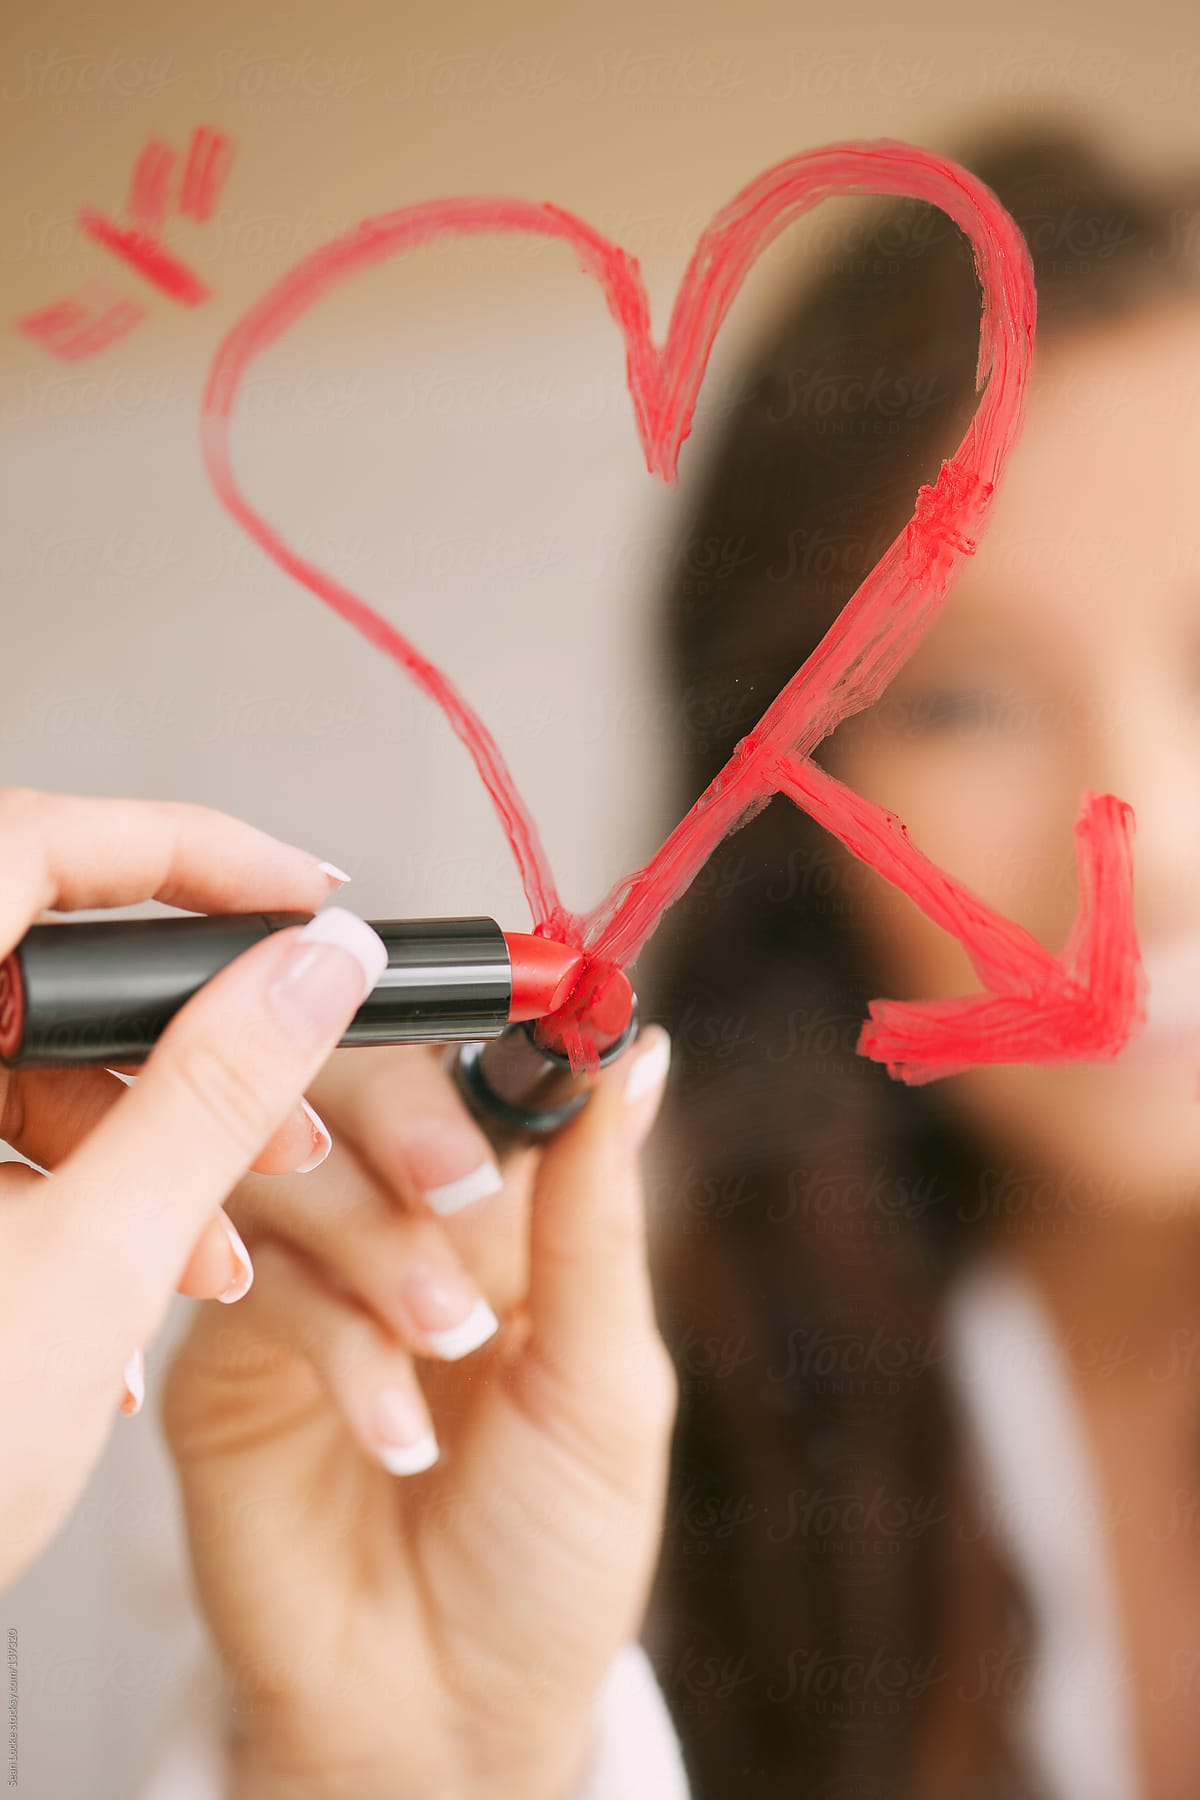 Valentine's: Woman Drawing Heart On Bathroom Mirror In Lipstick